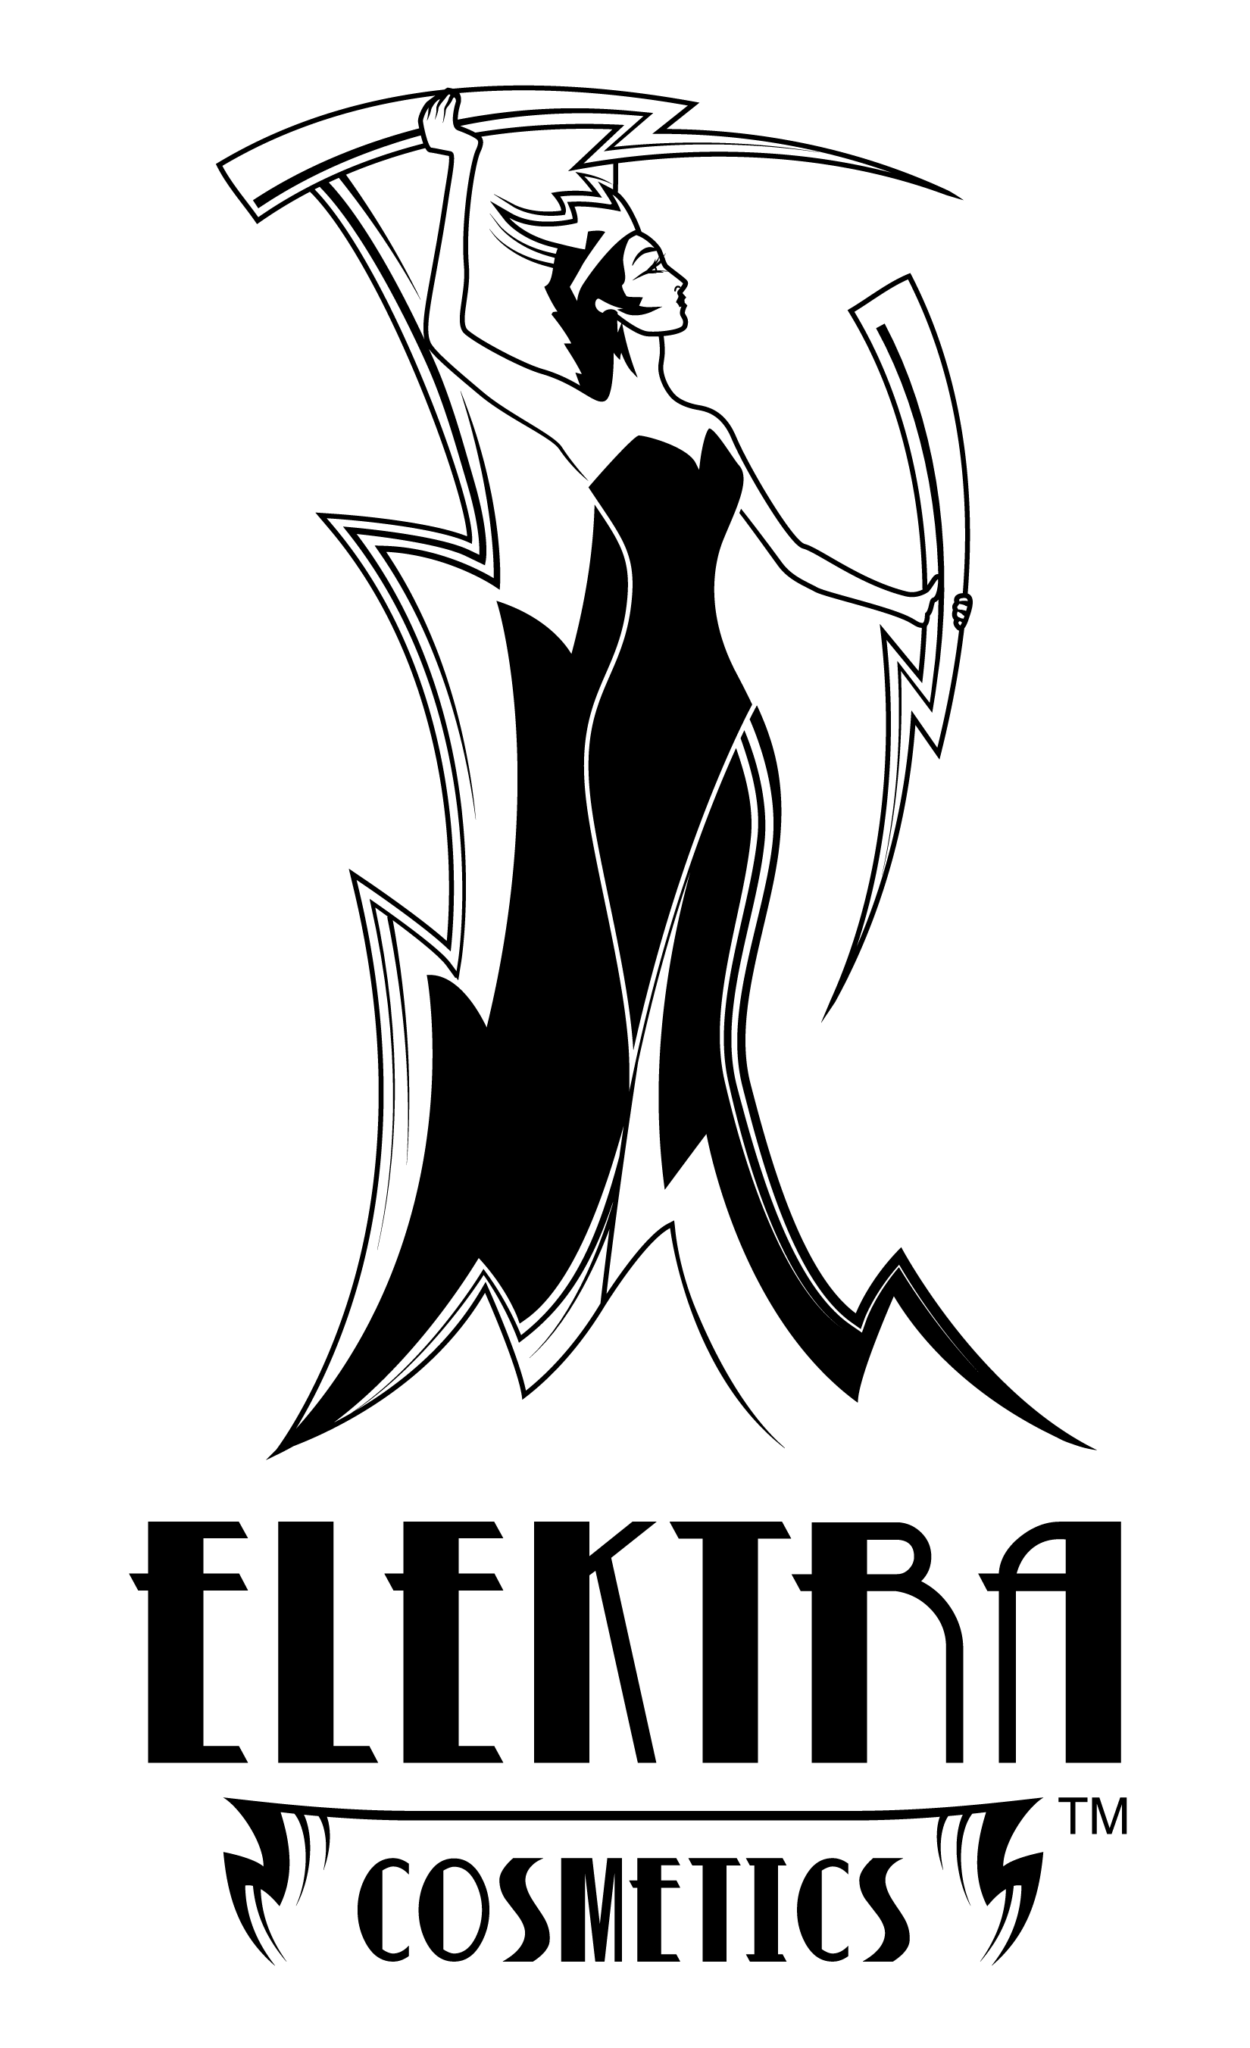 Elektra Cosmetics Logo with Woman in Black